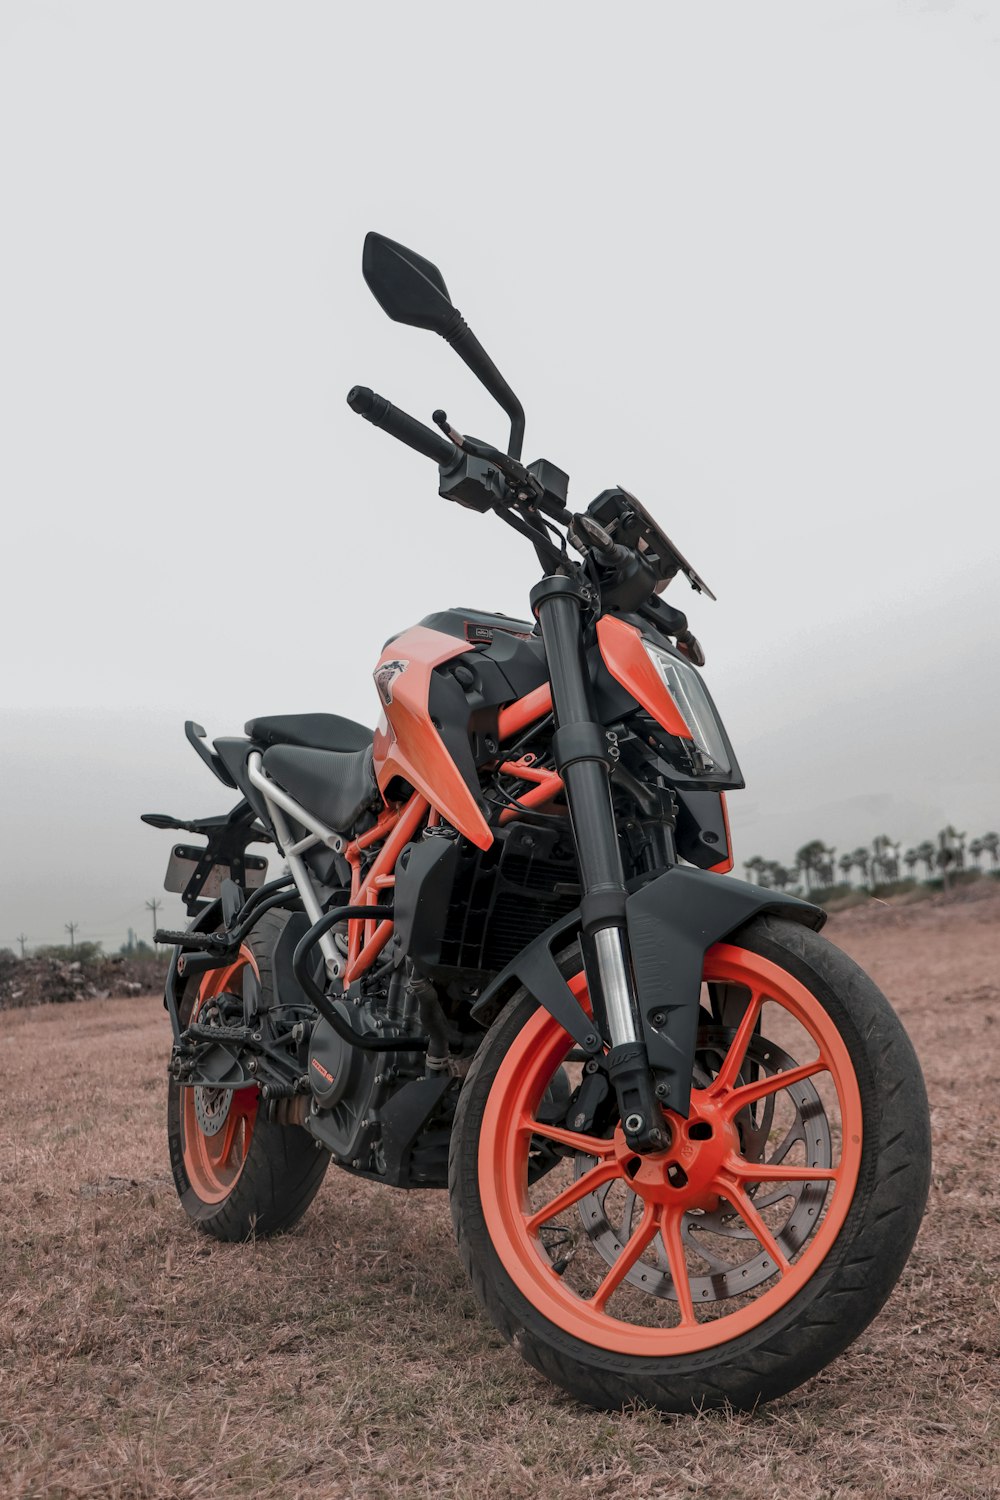 black and orange motorcycle on brown field during daytime